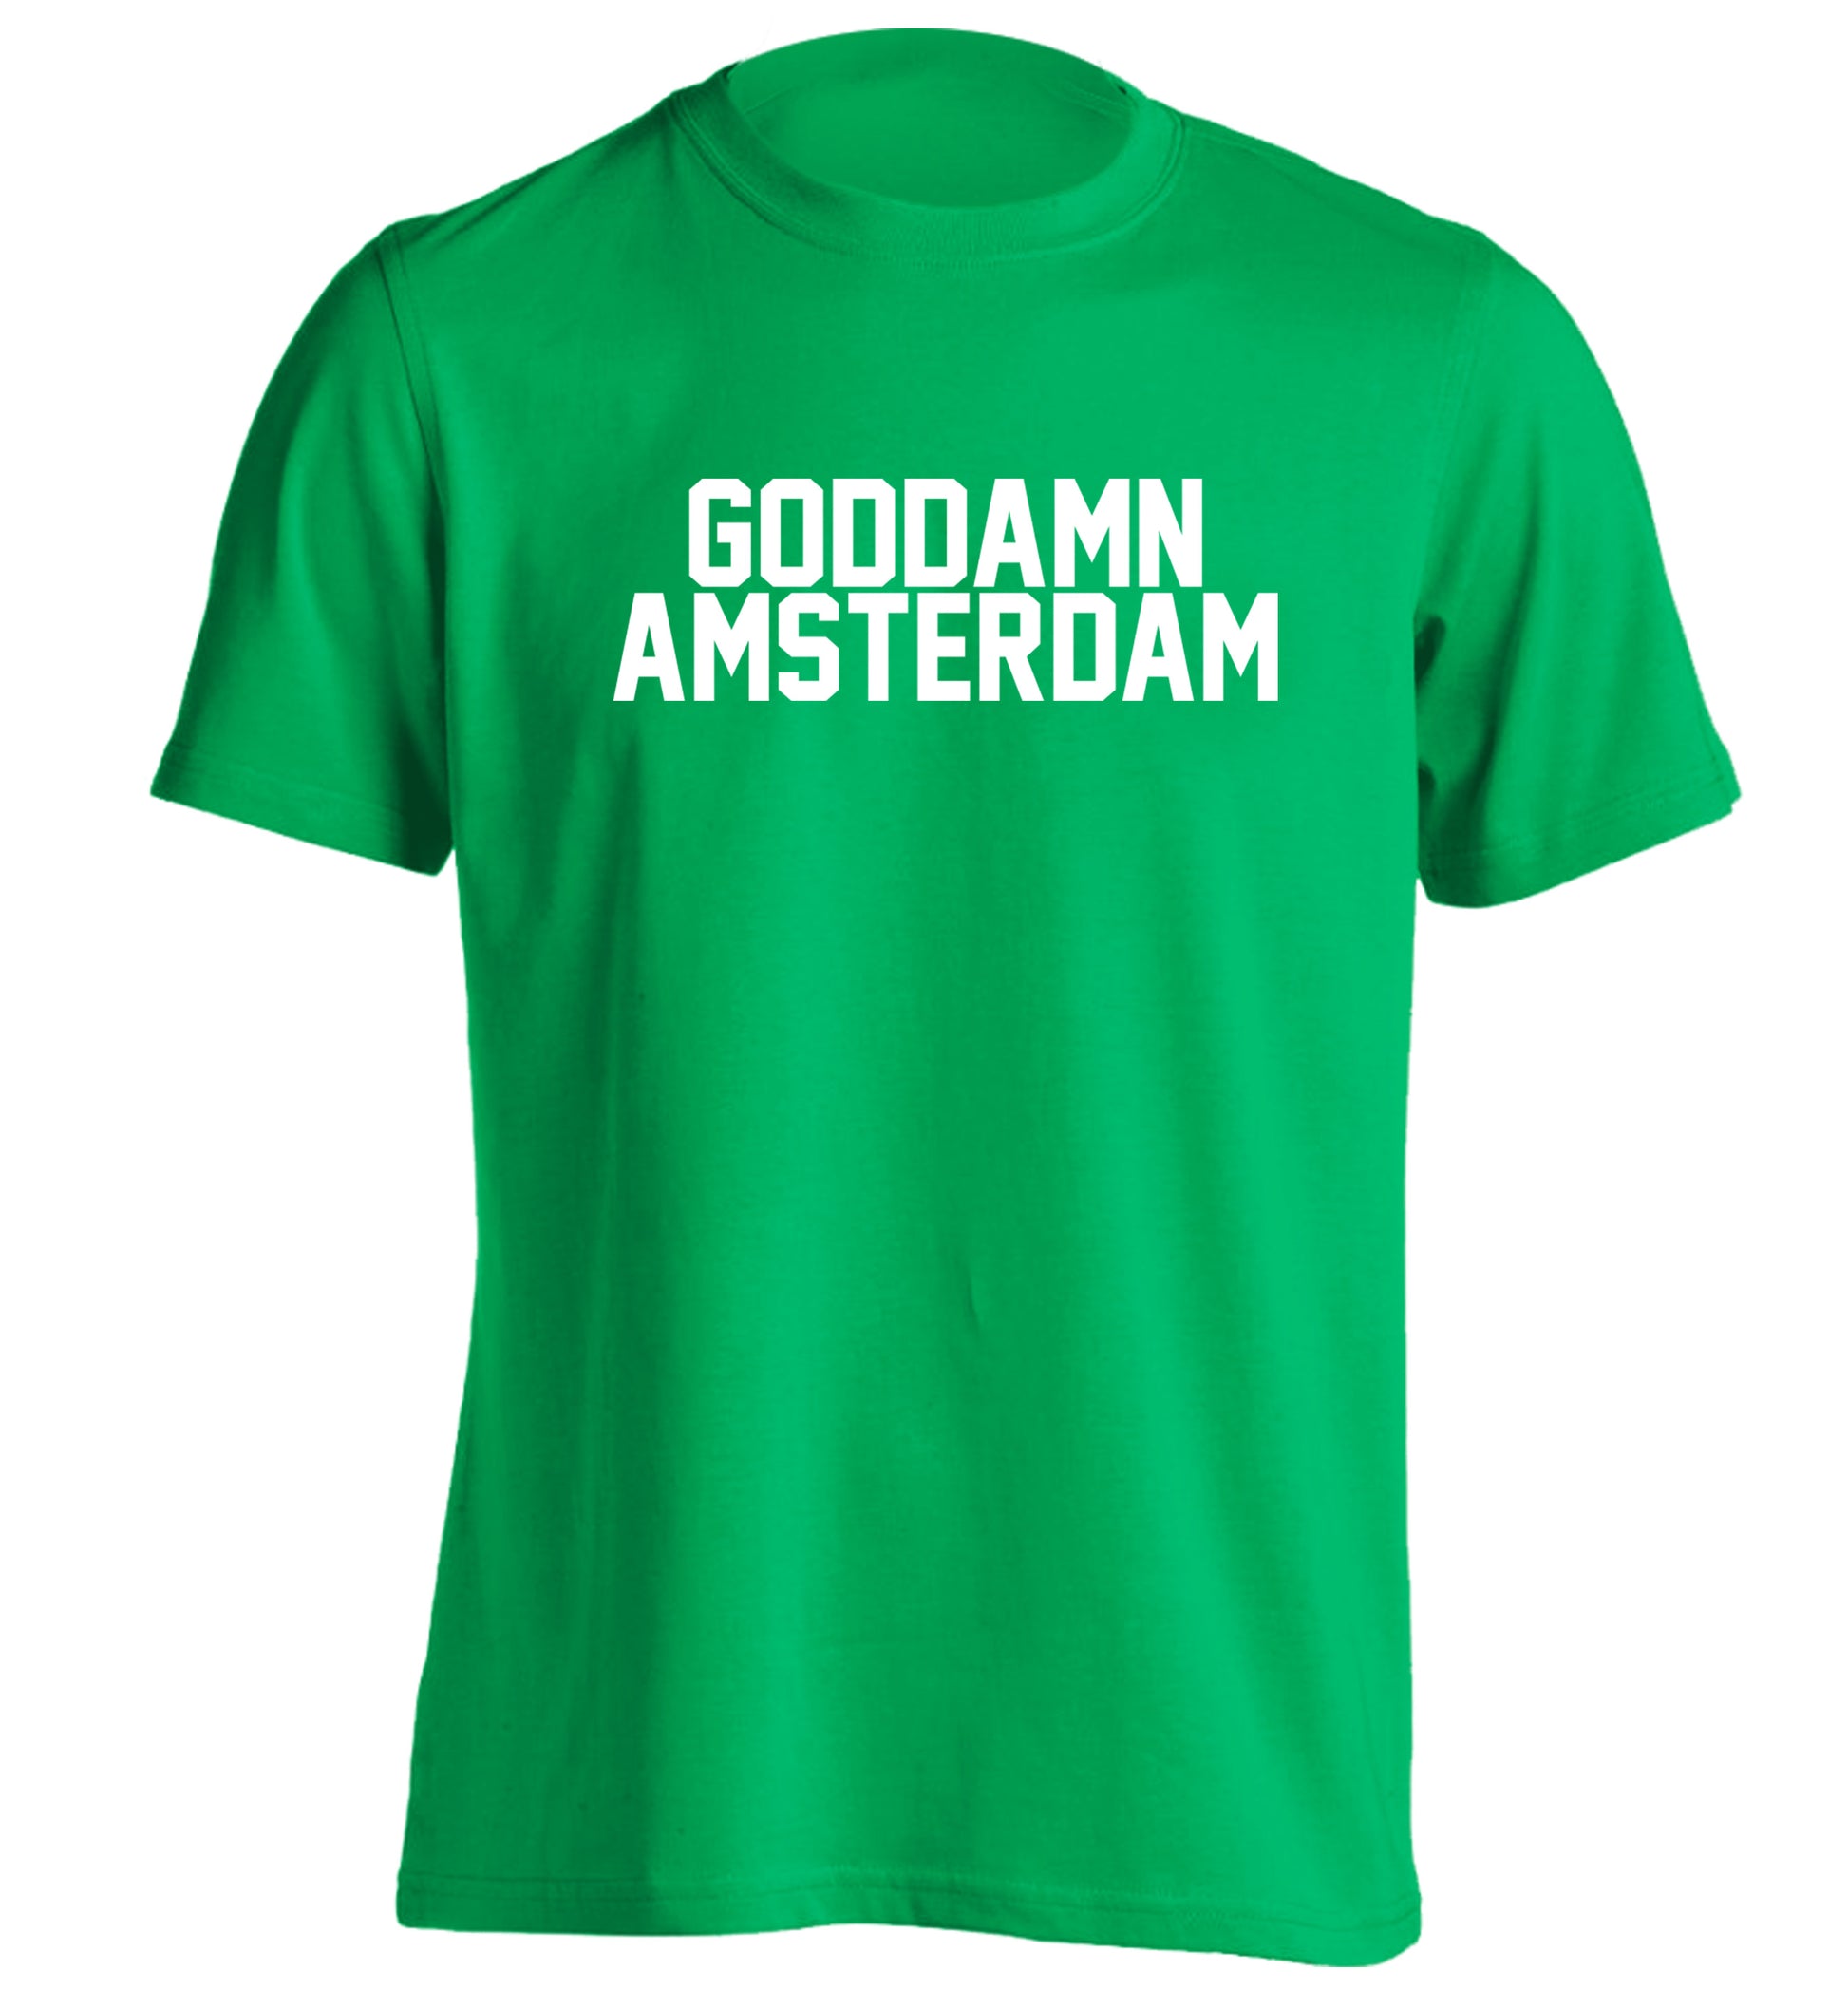 Goddamn Amsterdam adults unisex green Tshirt 2XL